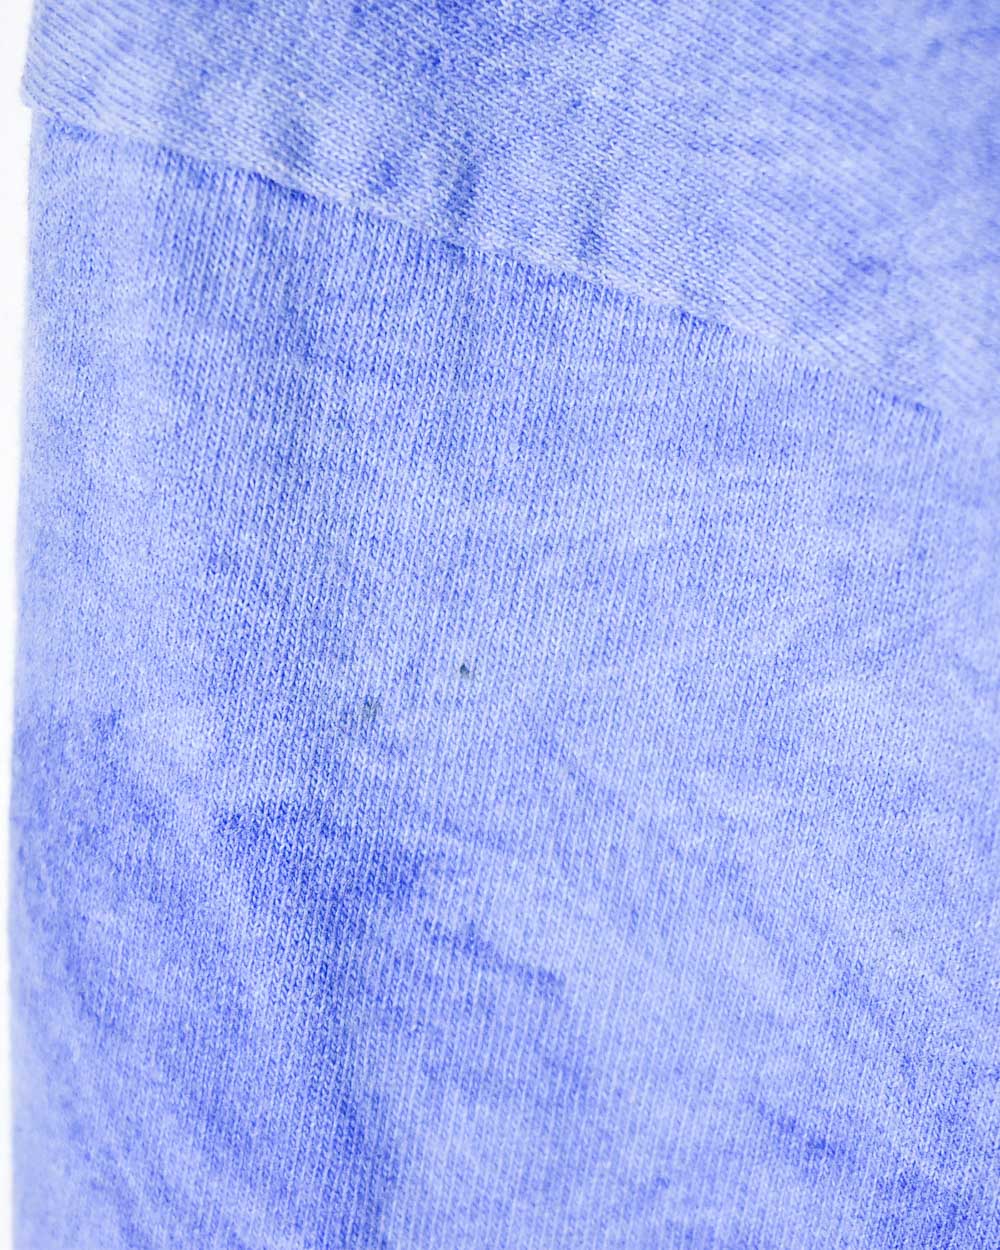 Blue Disney's Wilderness Lodge Eagle Dyed Single Stitch T-Shirt - XX-Large